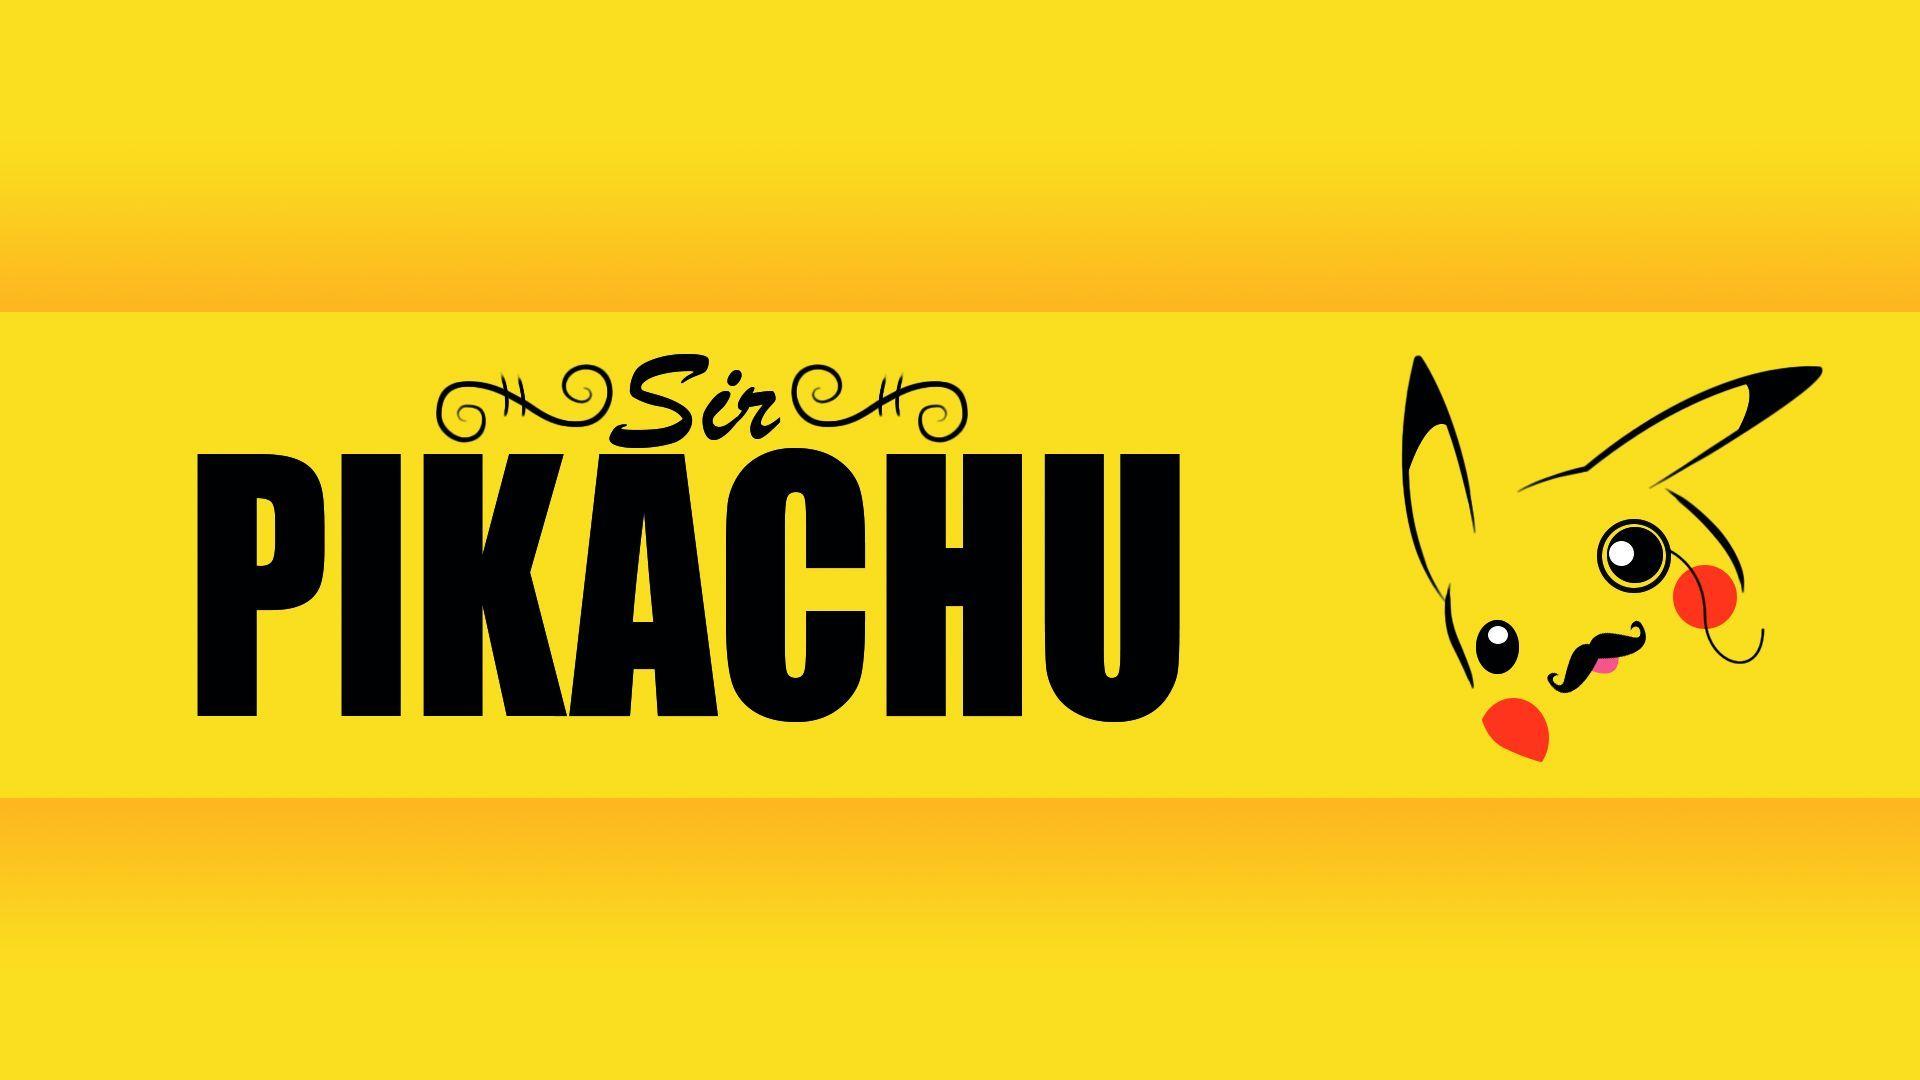 Download Detective Movie Pikachu Pic Pokemon HQ PNG Image | FreePNGImg